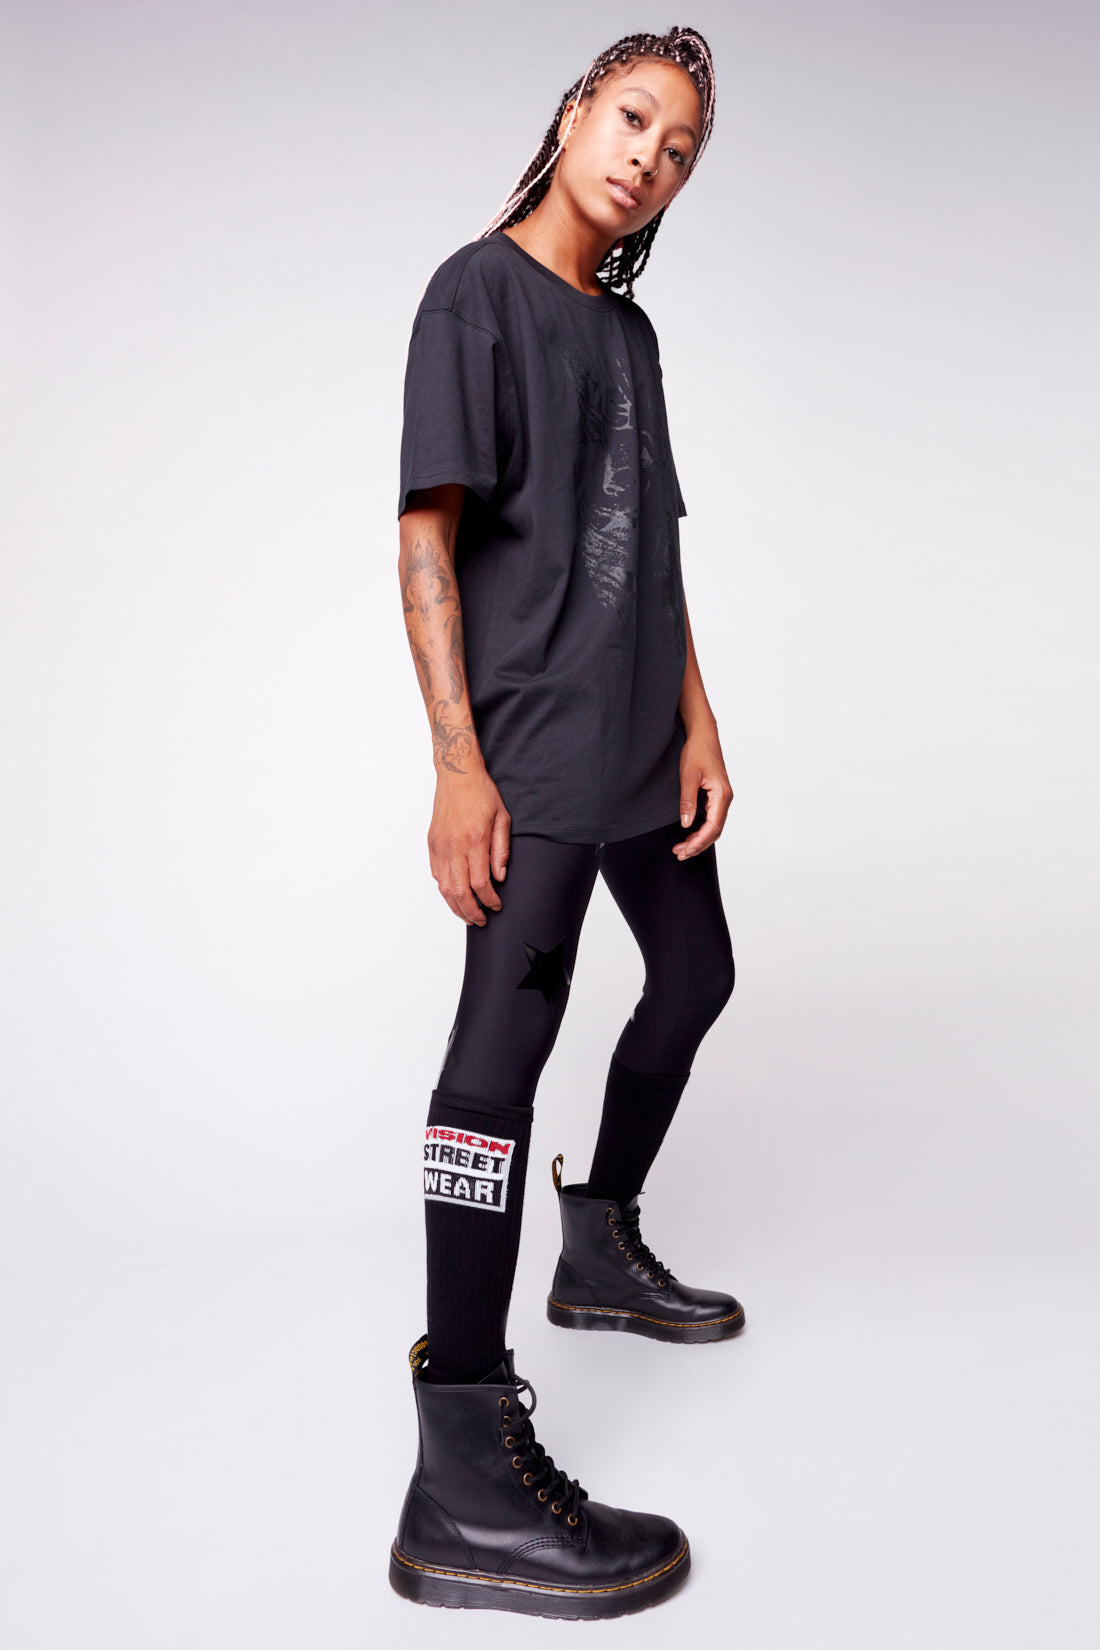 Vision Street Wear Skateboard Sports Socks Black